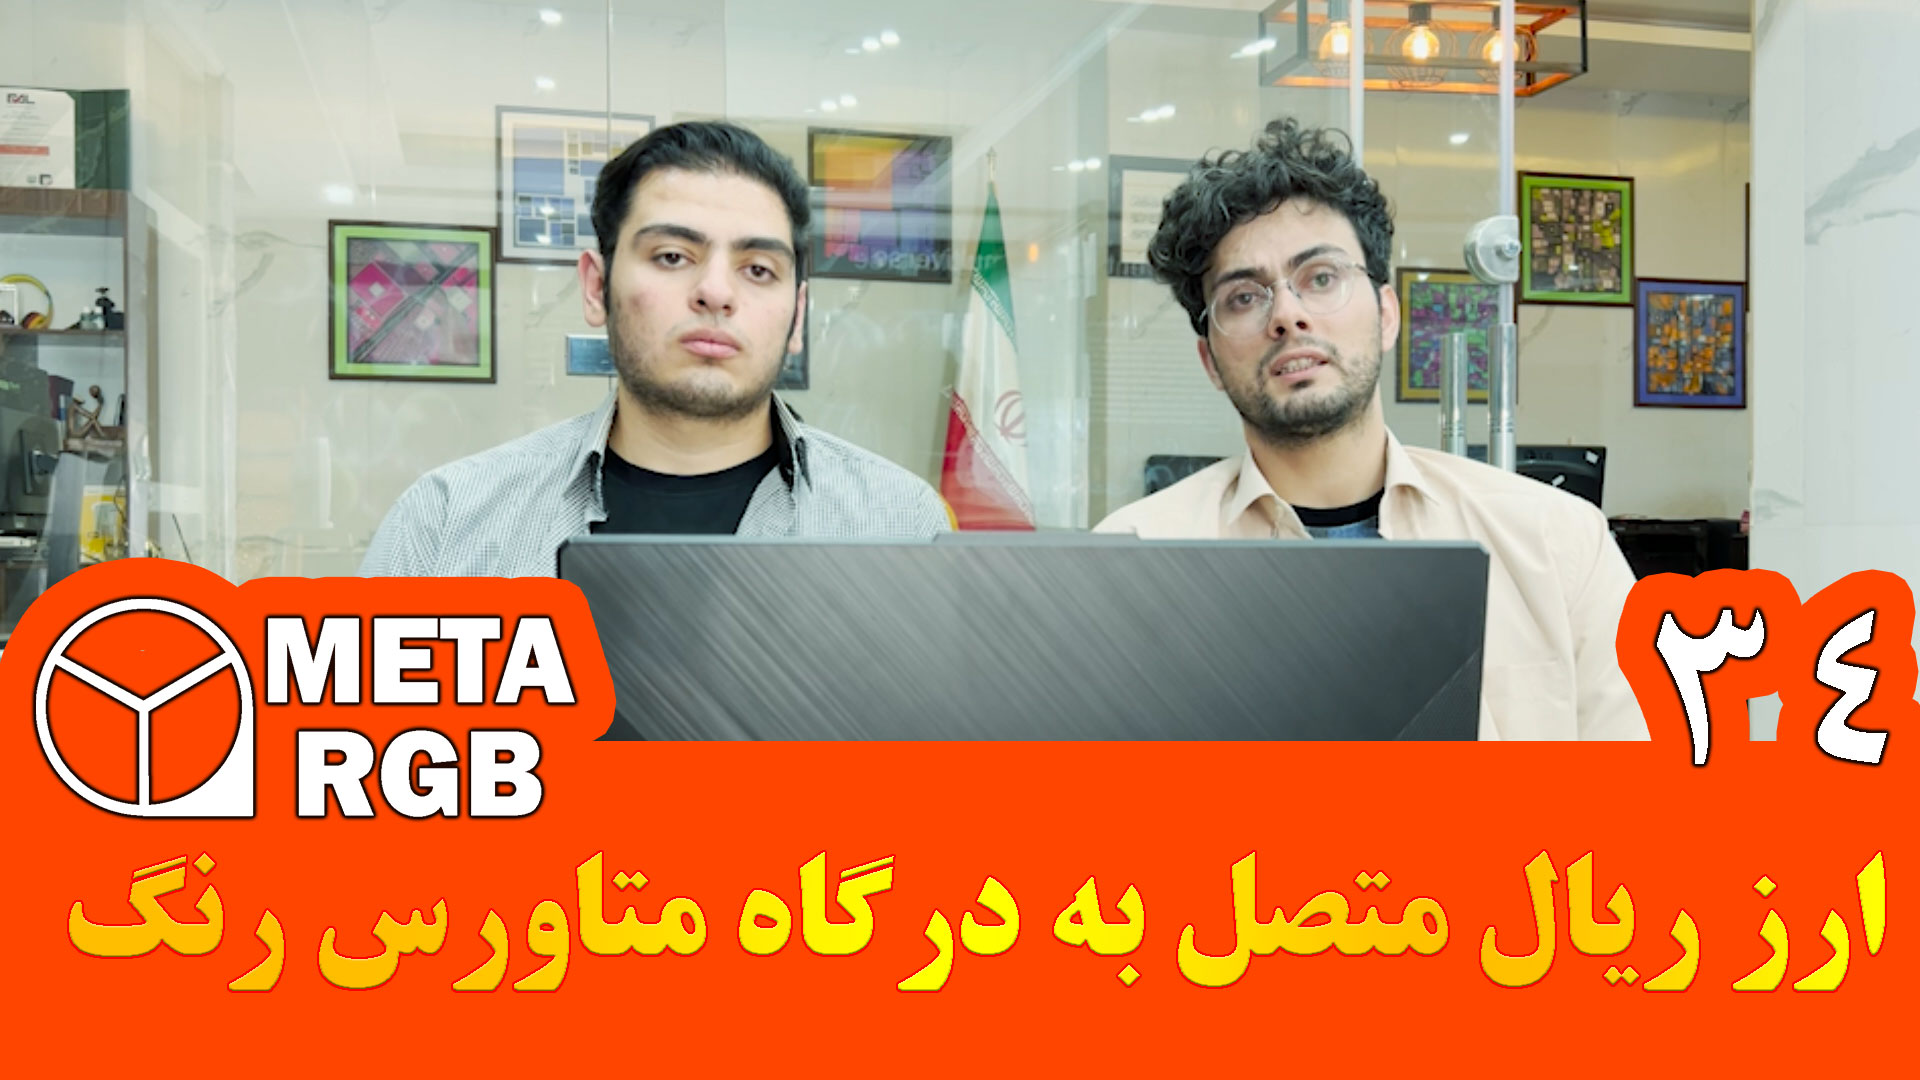 g34 3 - ارز ریال متصل به درگاه متاورس رنگ برای ساخت دنیای مجازی ایرانی !